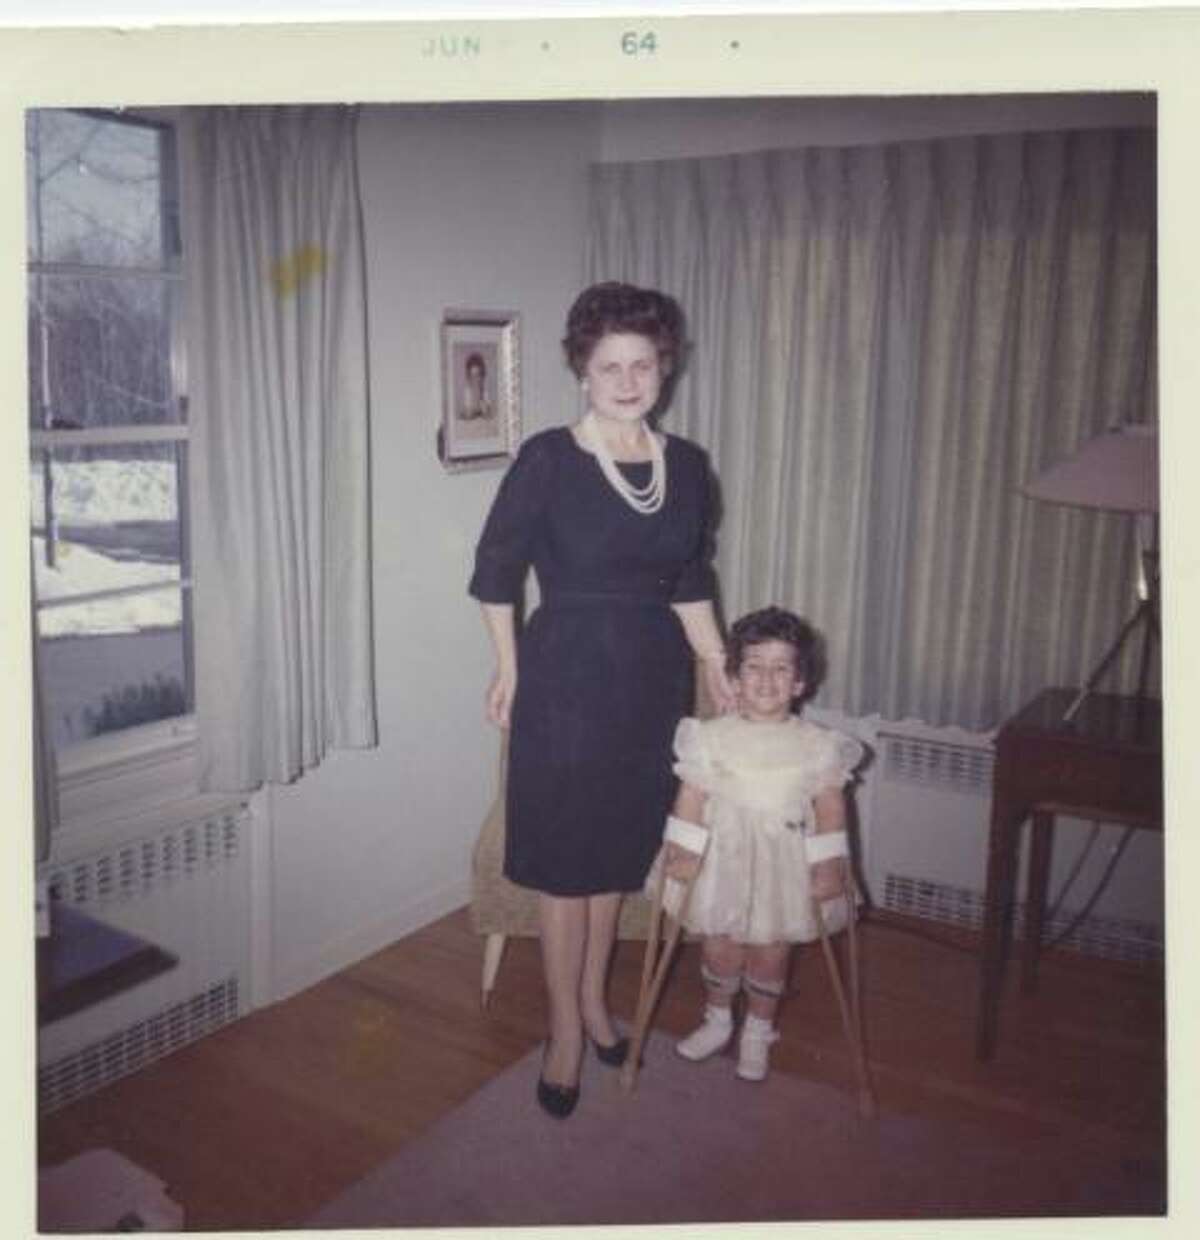 Primetta Giacopini (left) and her daughter Dorene Giacopini in their Torrington home on June 1964.